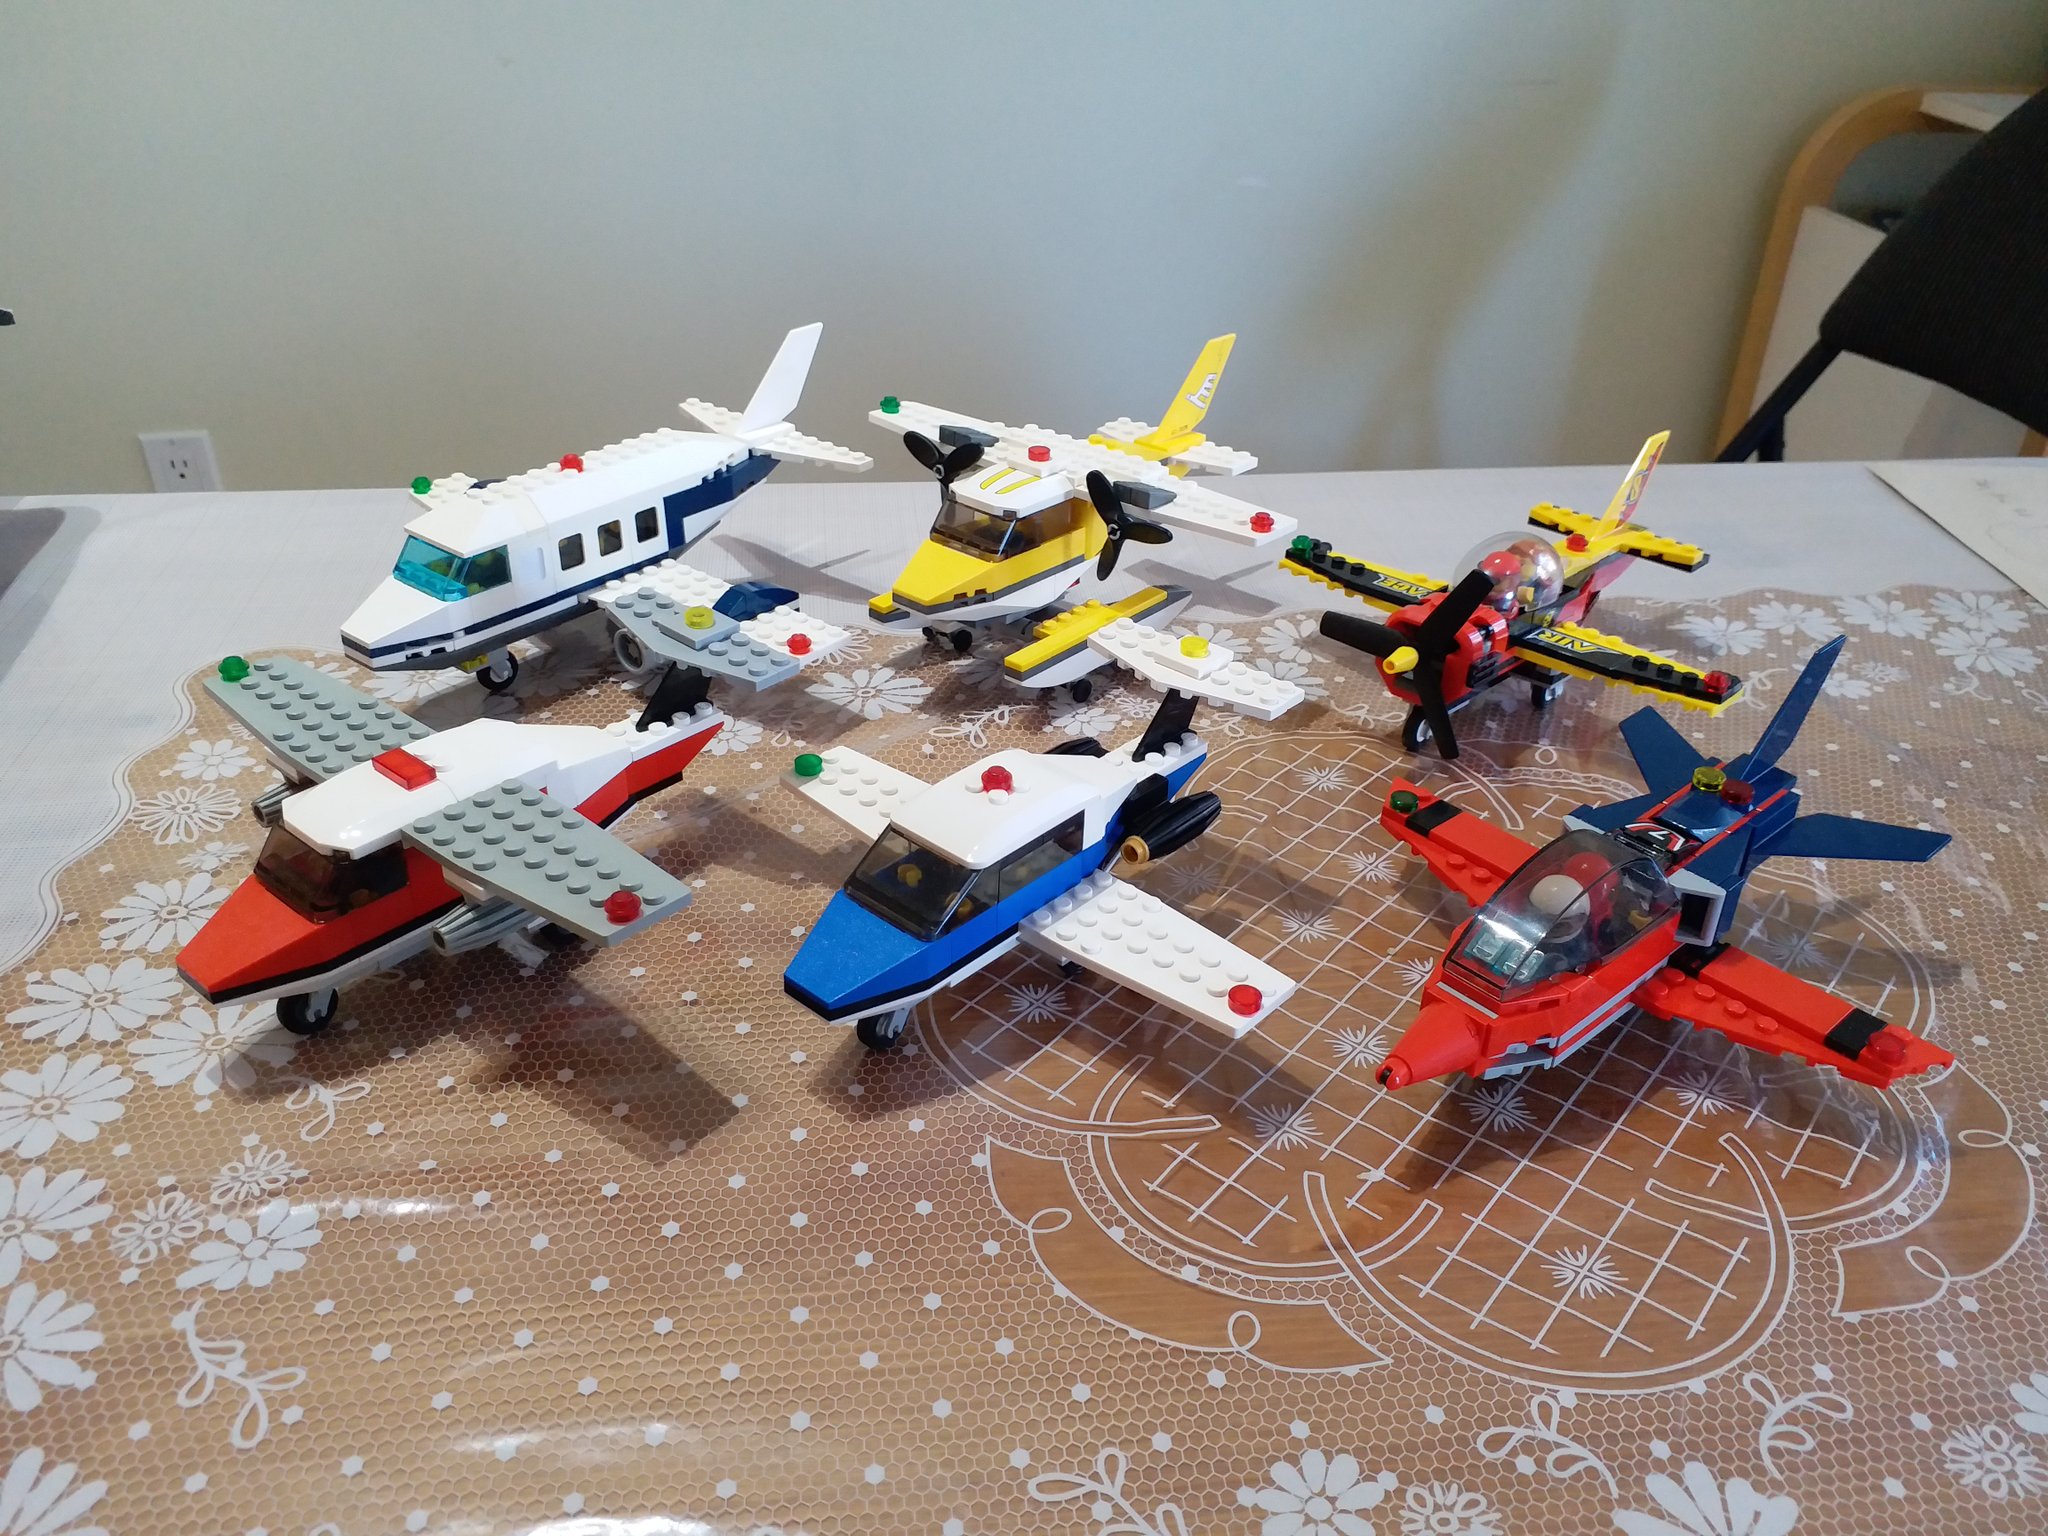 Gwai Fa Tin 貴花田 on Twitter: "My Lego fleet MOC modification, all seats two people and studs wide in fuselage, cargo plane seat single pilot https://t.co/rWvX50ewT0" / X